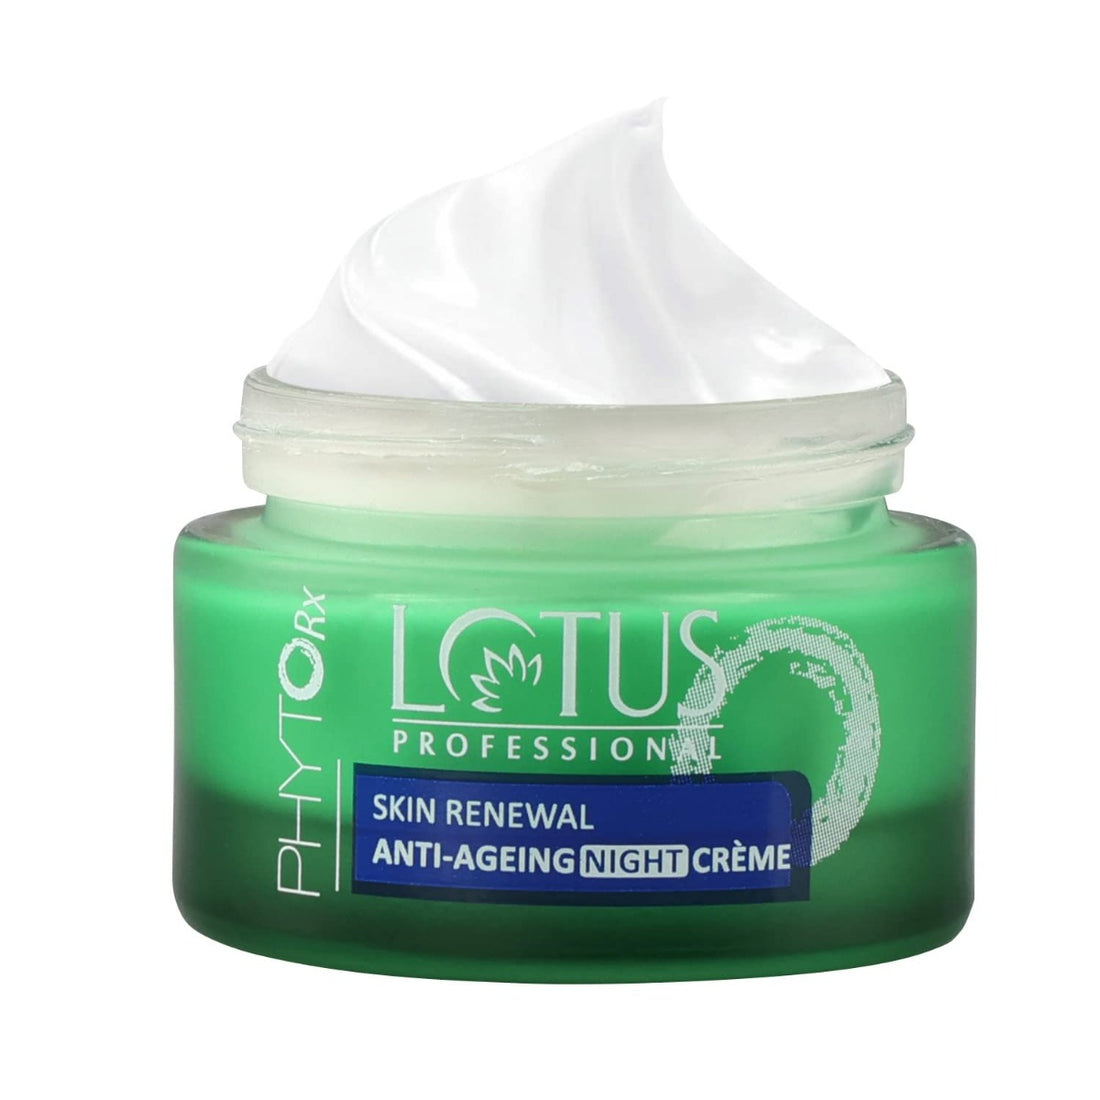 Lotus Herbals Phyto-Rx Skin Renewal Antiaging Night Cream (50gm)